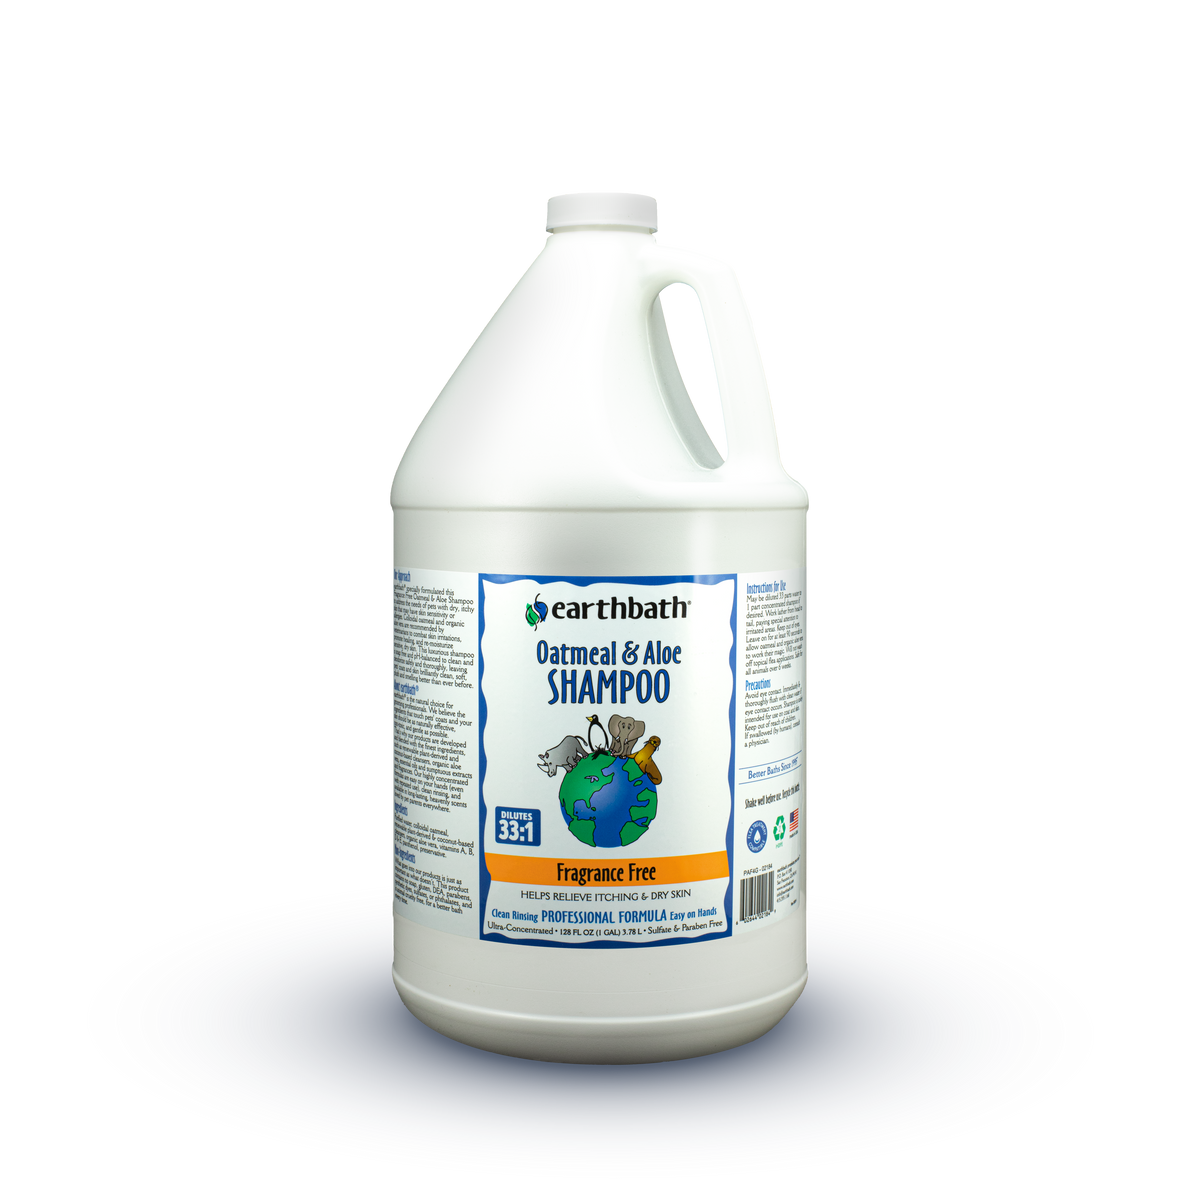 earthbath® Oatmeal & Aloe Shampoo, Fragrance Free, Helps Relieve Itchy Dry Skin, Made in USA, 128 oz